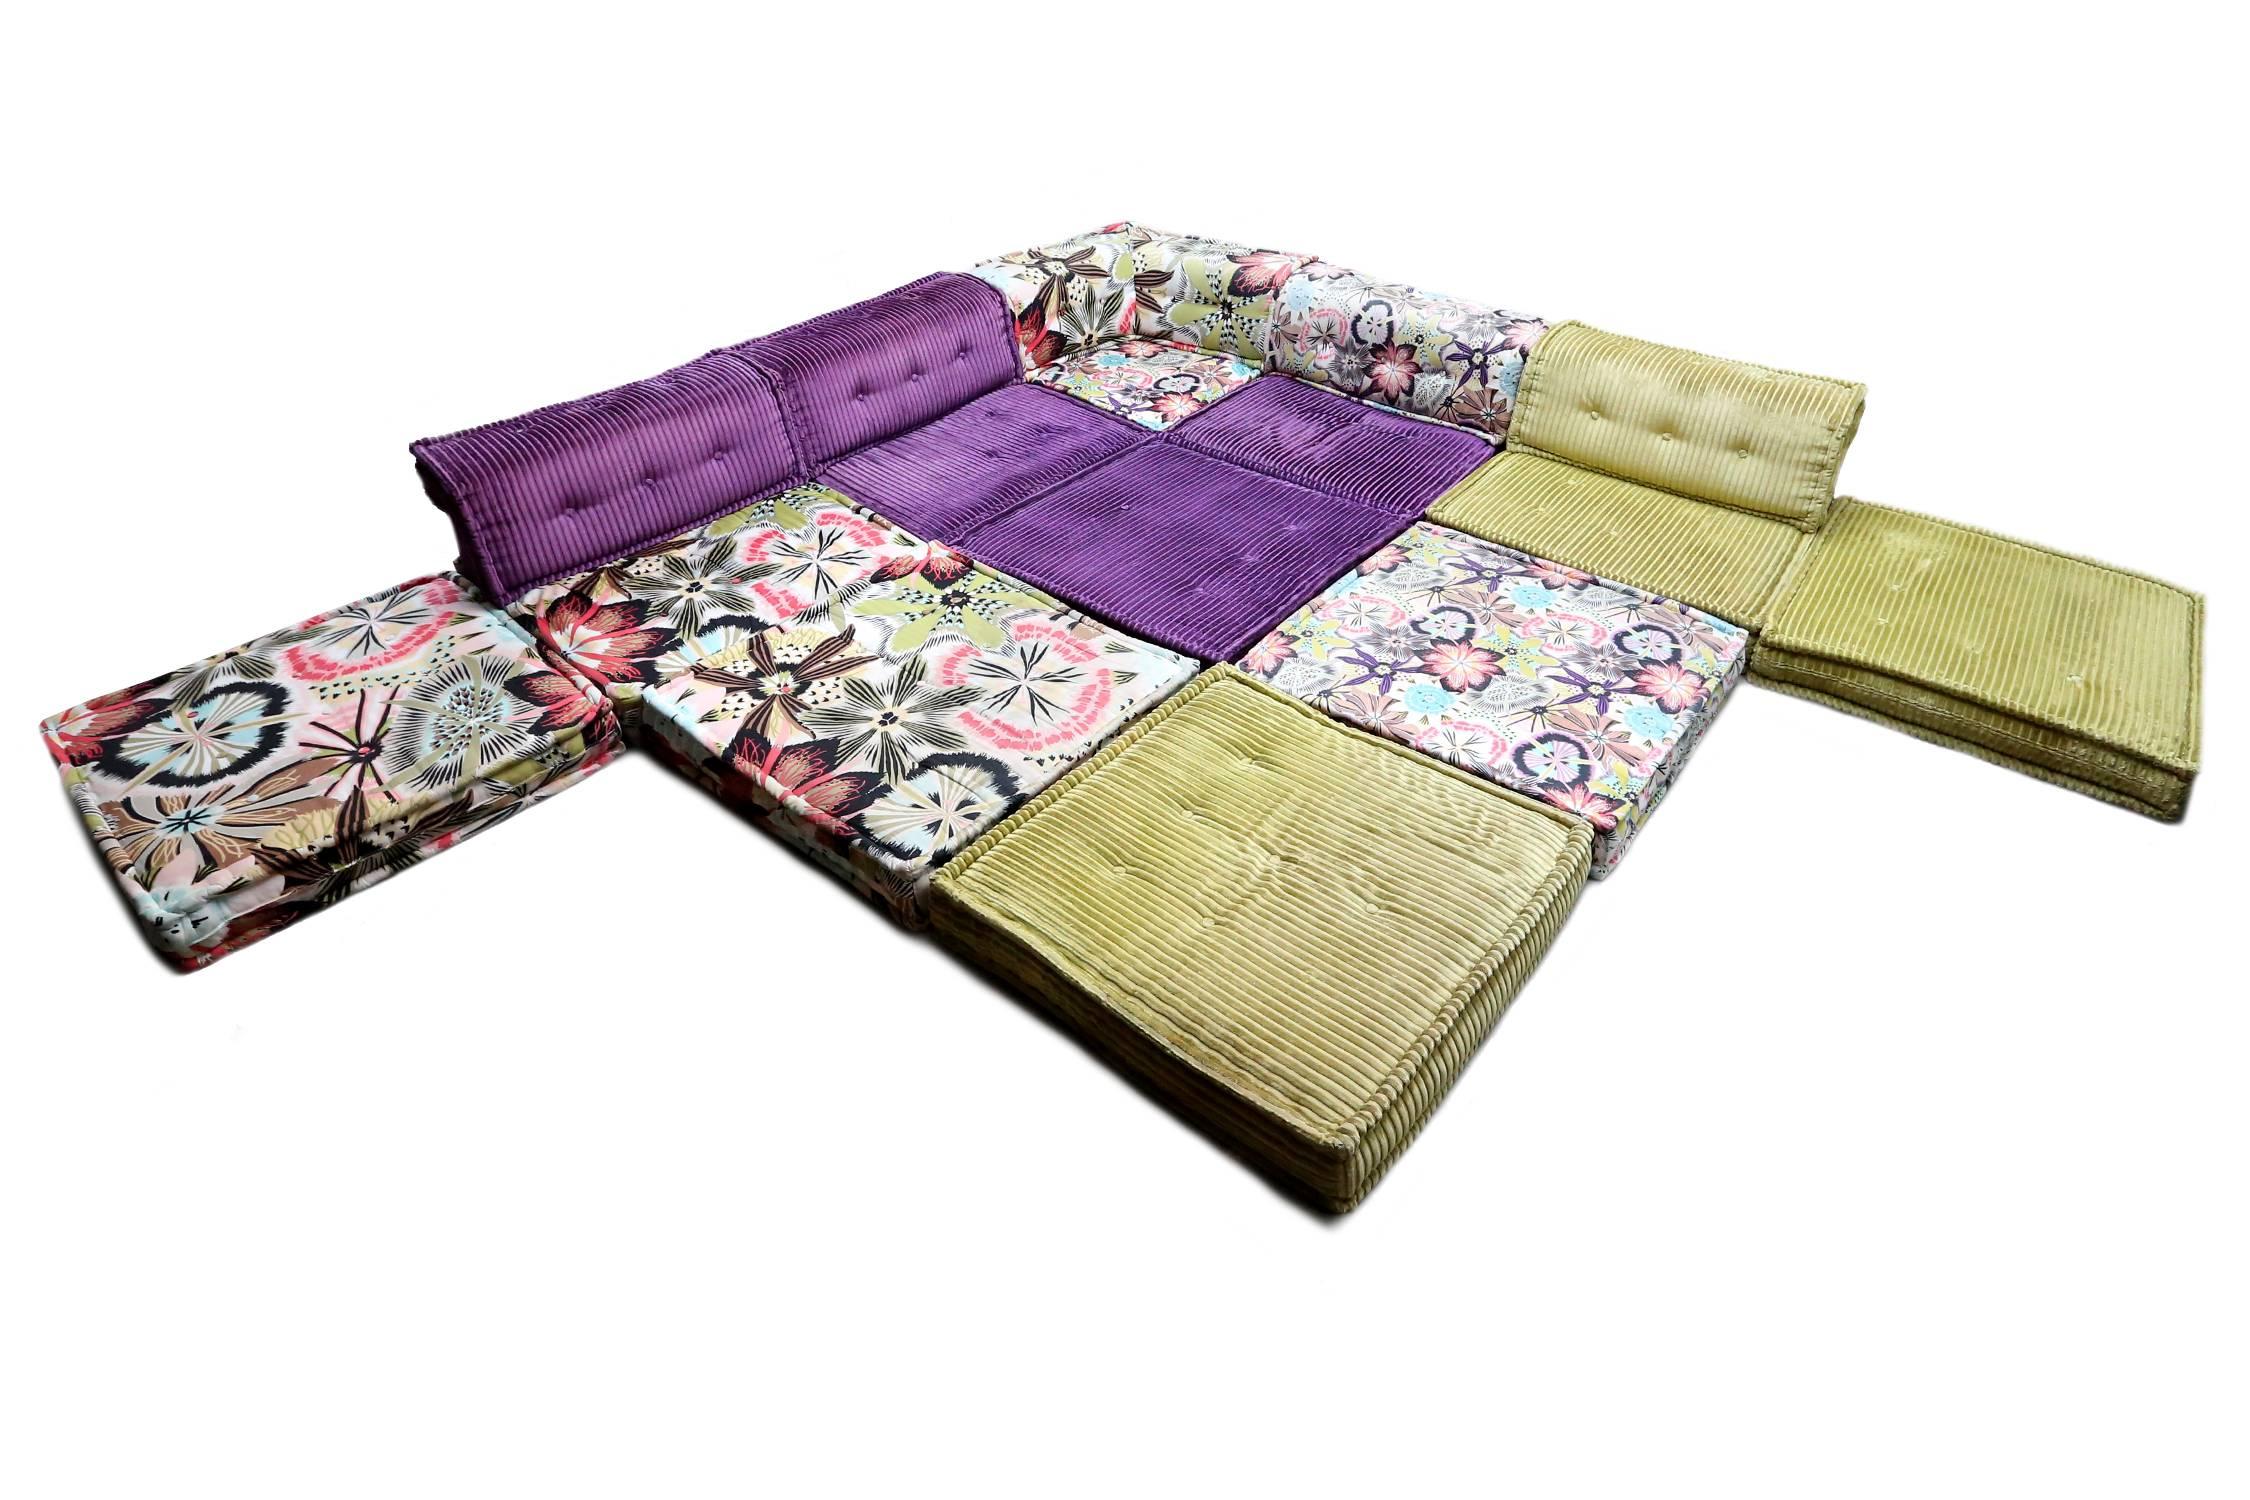 Mah Jong sofa by Roche Bobois with purple and green velvet cushions, Missoni home fabric. 

Consisting of one corner back cushion, 4 back cushions (H 53 cm), 12 seat cushions (95 x 95 x 19 cm) providing endless combinations.

Design Hans Hopfer,